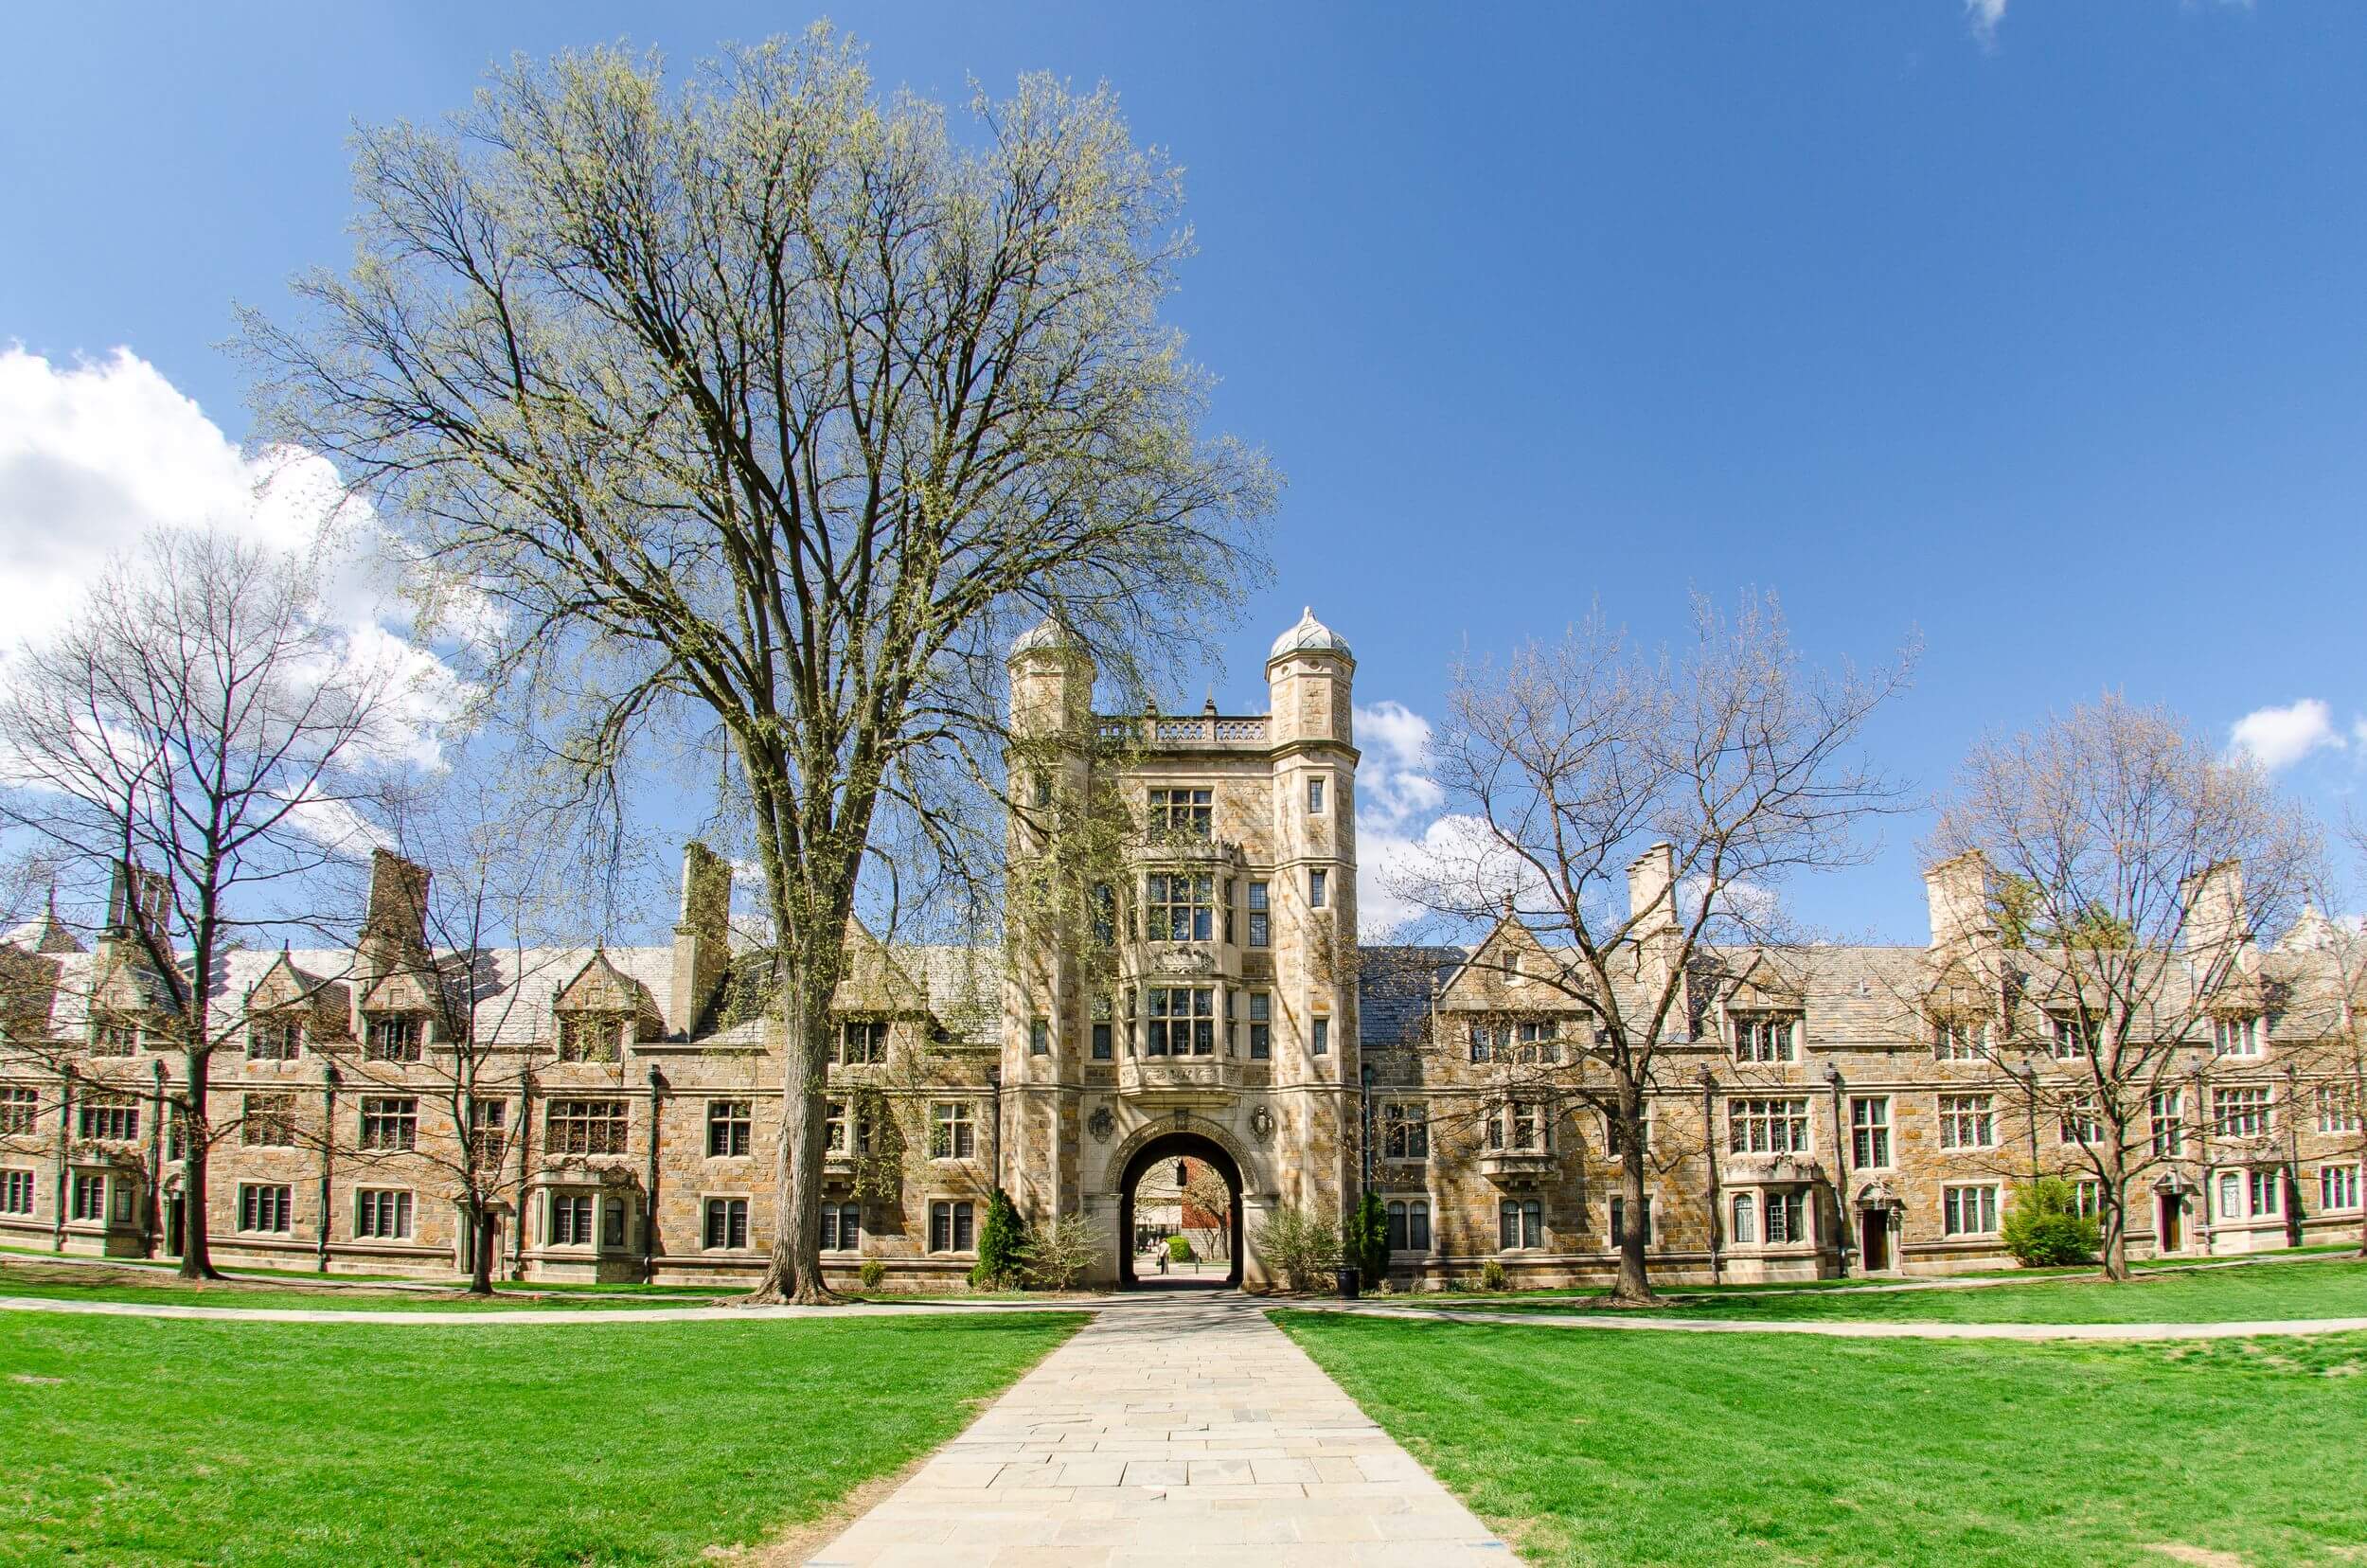 Facade of University of Michigan's Law School.